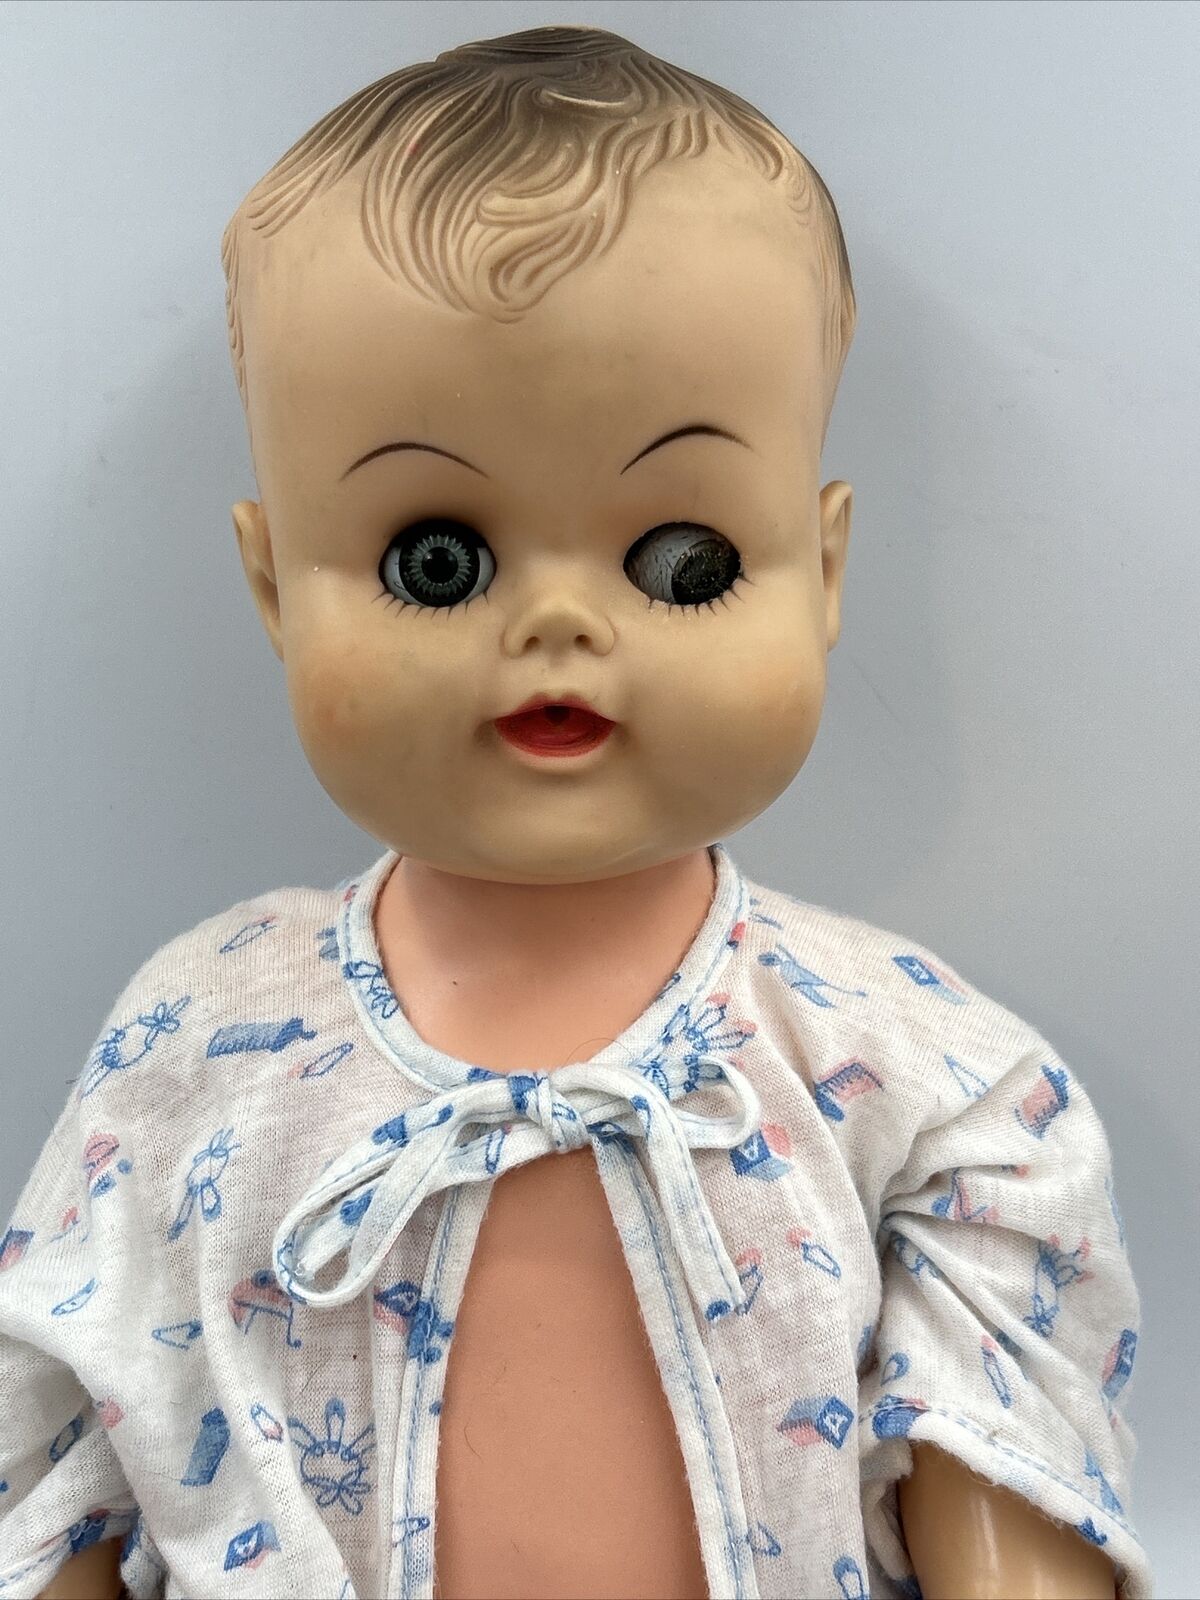 Vintage Unmarked Vinyl Baby Doll 20" Creepy Wonky Eyes Halloween Doll Prop